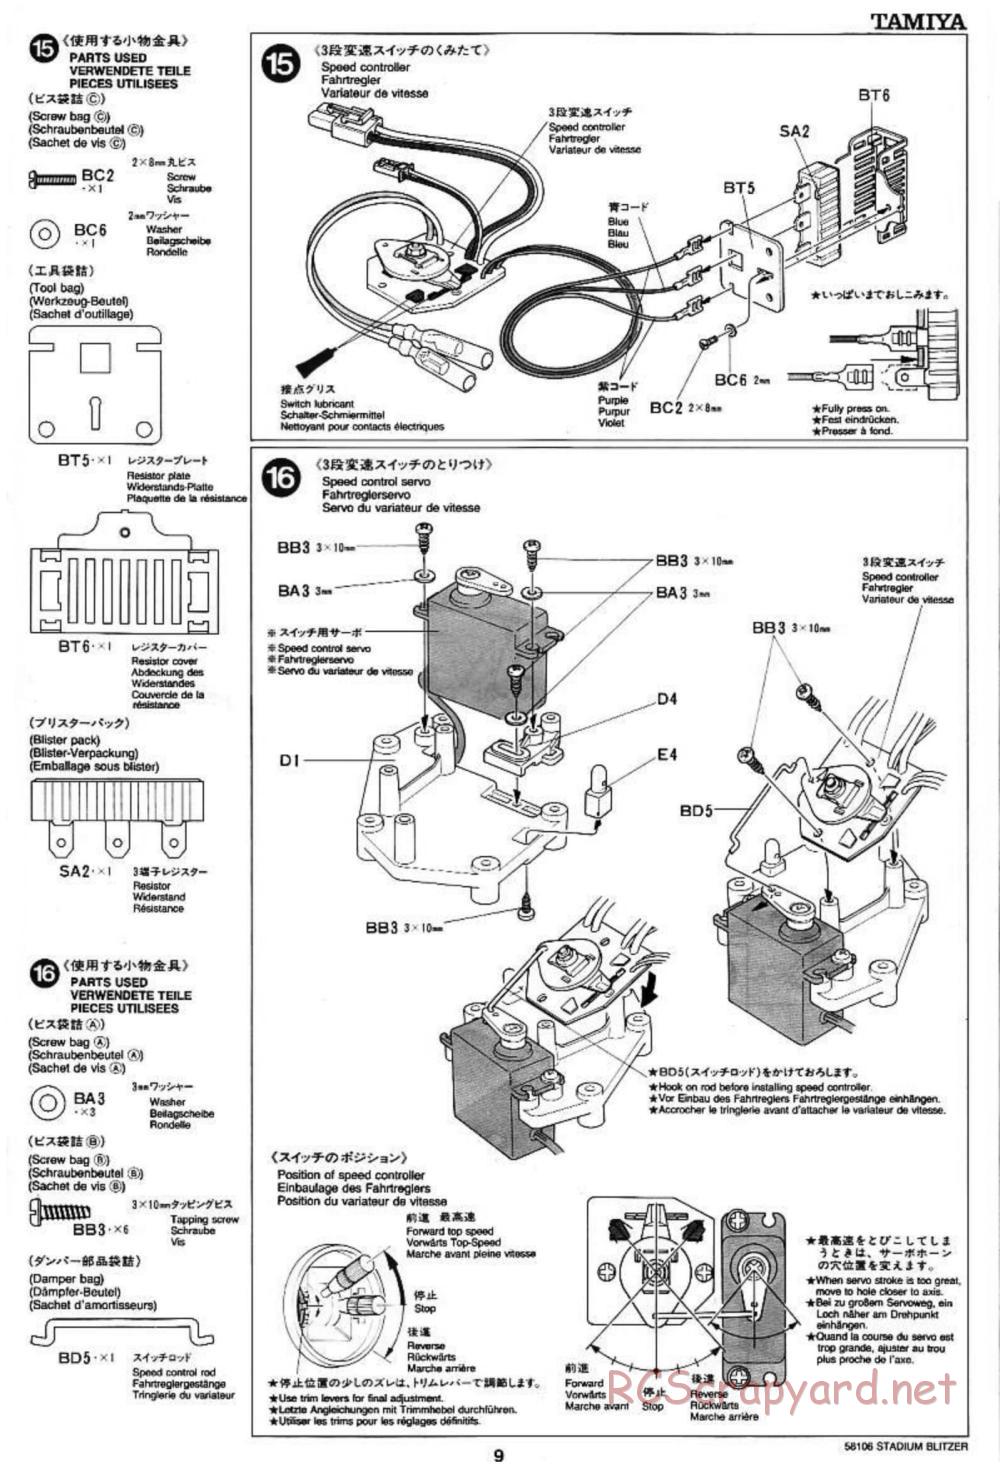 Tamiya - Stadium Blitzer Chassis - Manual - Page 9